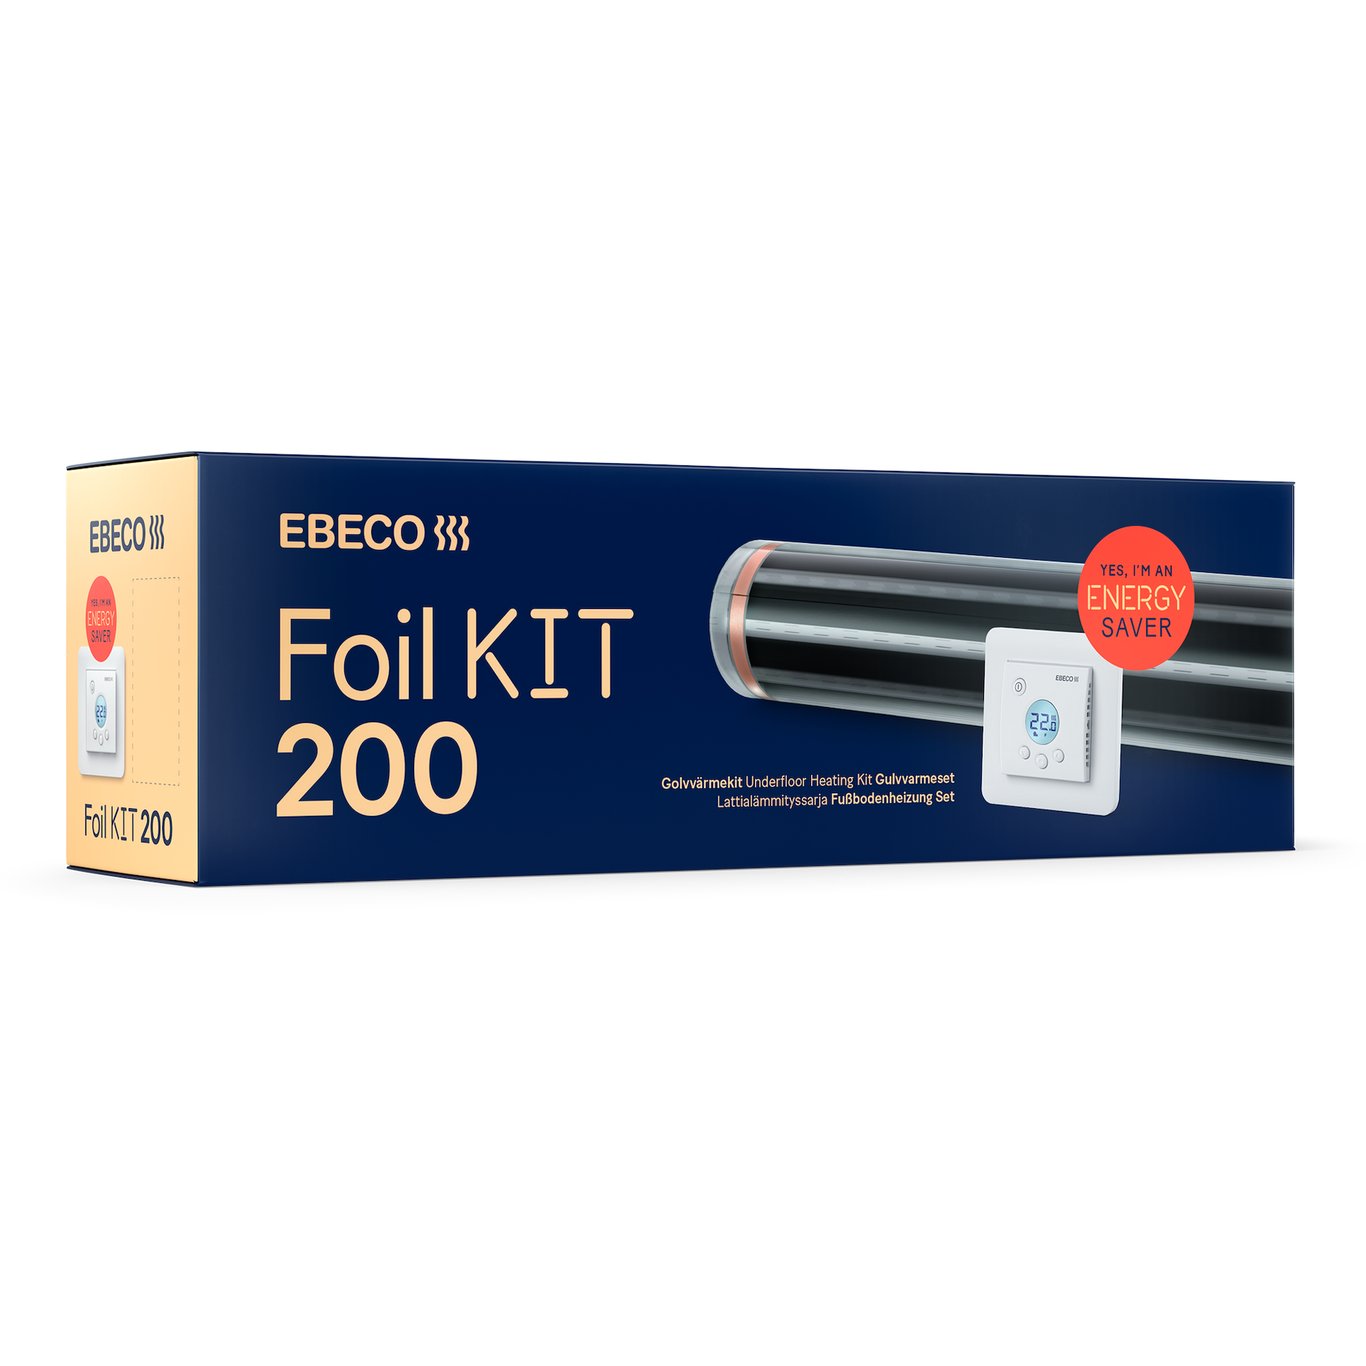 EBECO FOIL KIT 200 12-14 M² 65W/M²